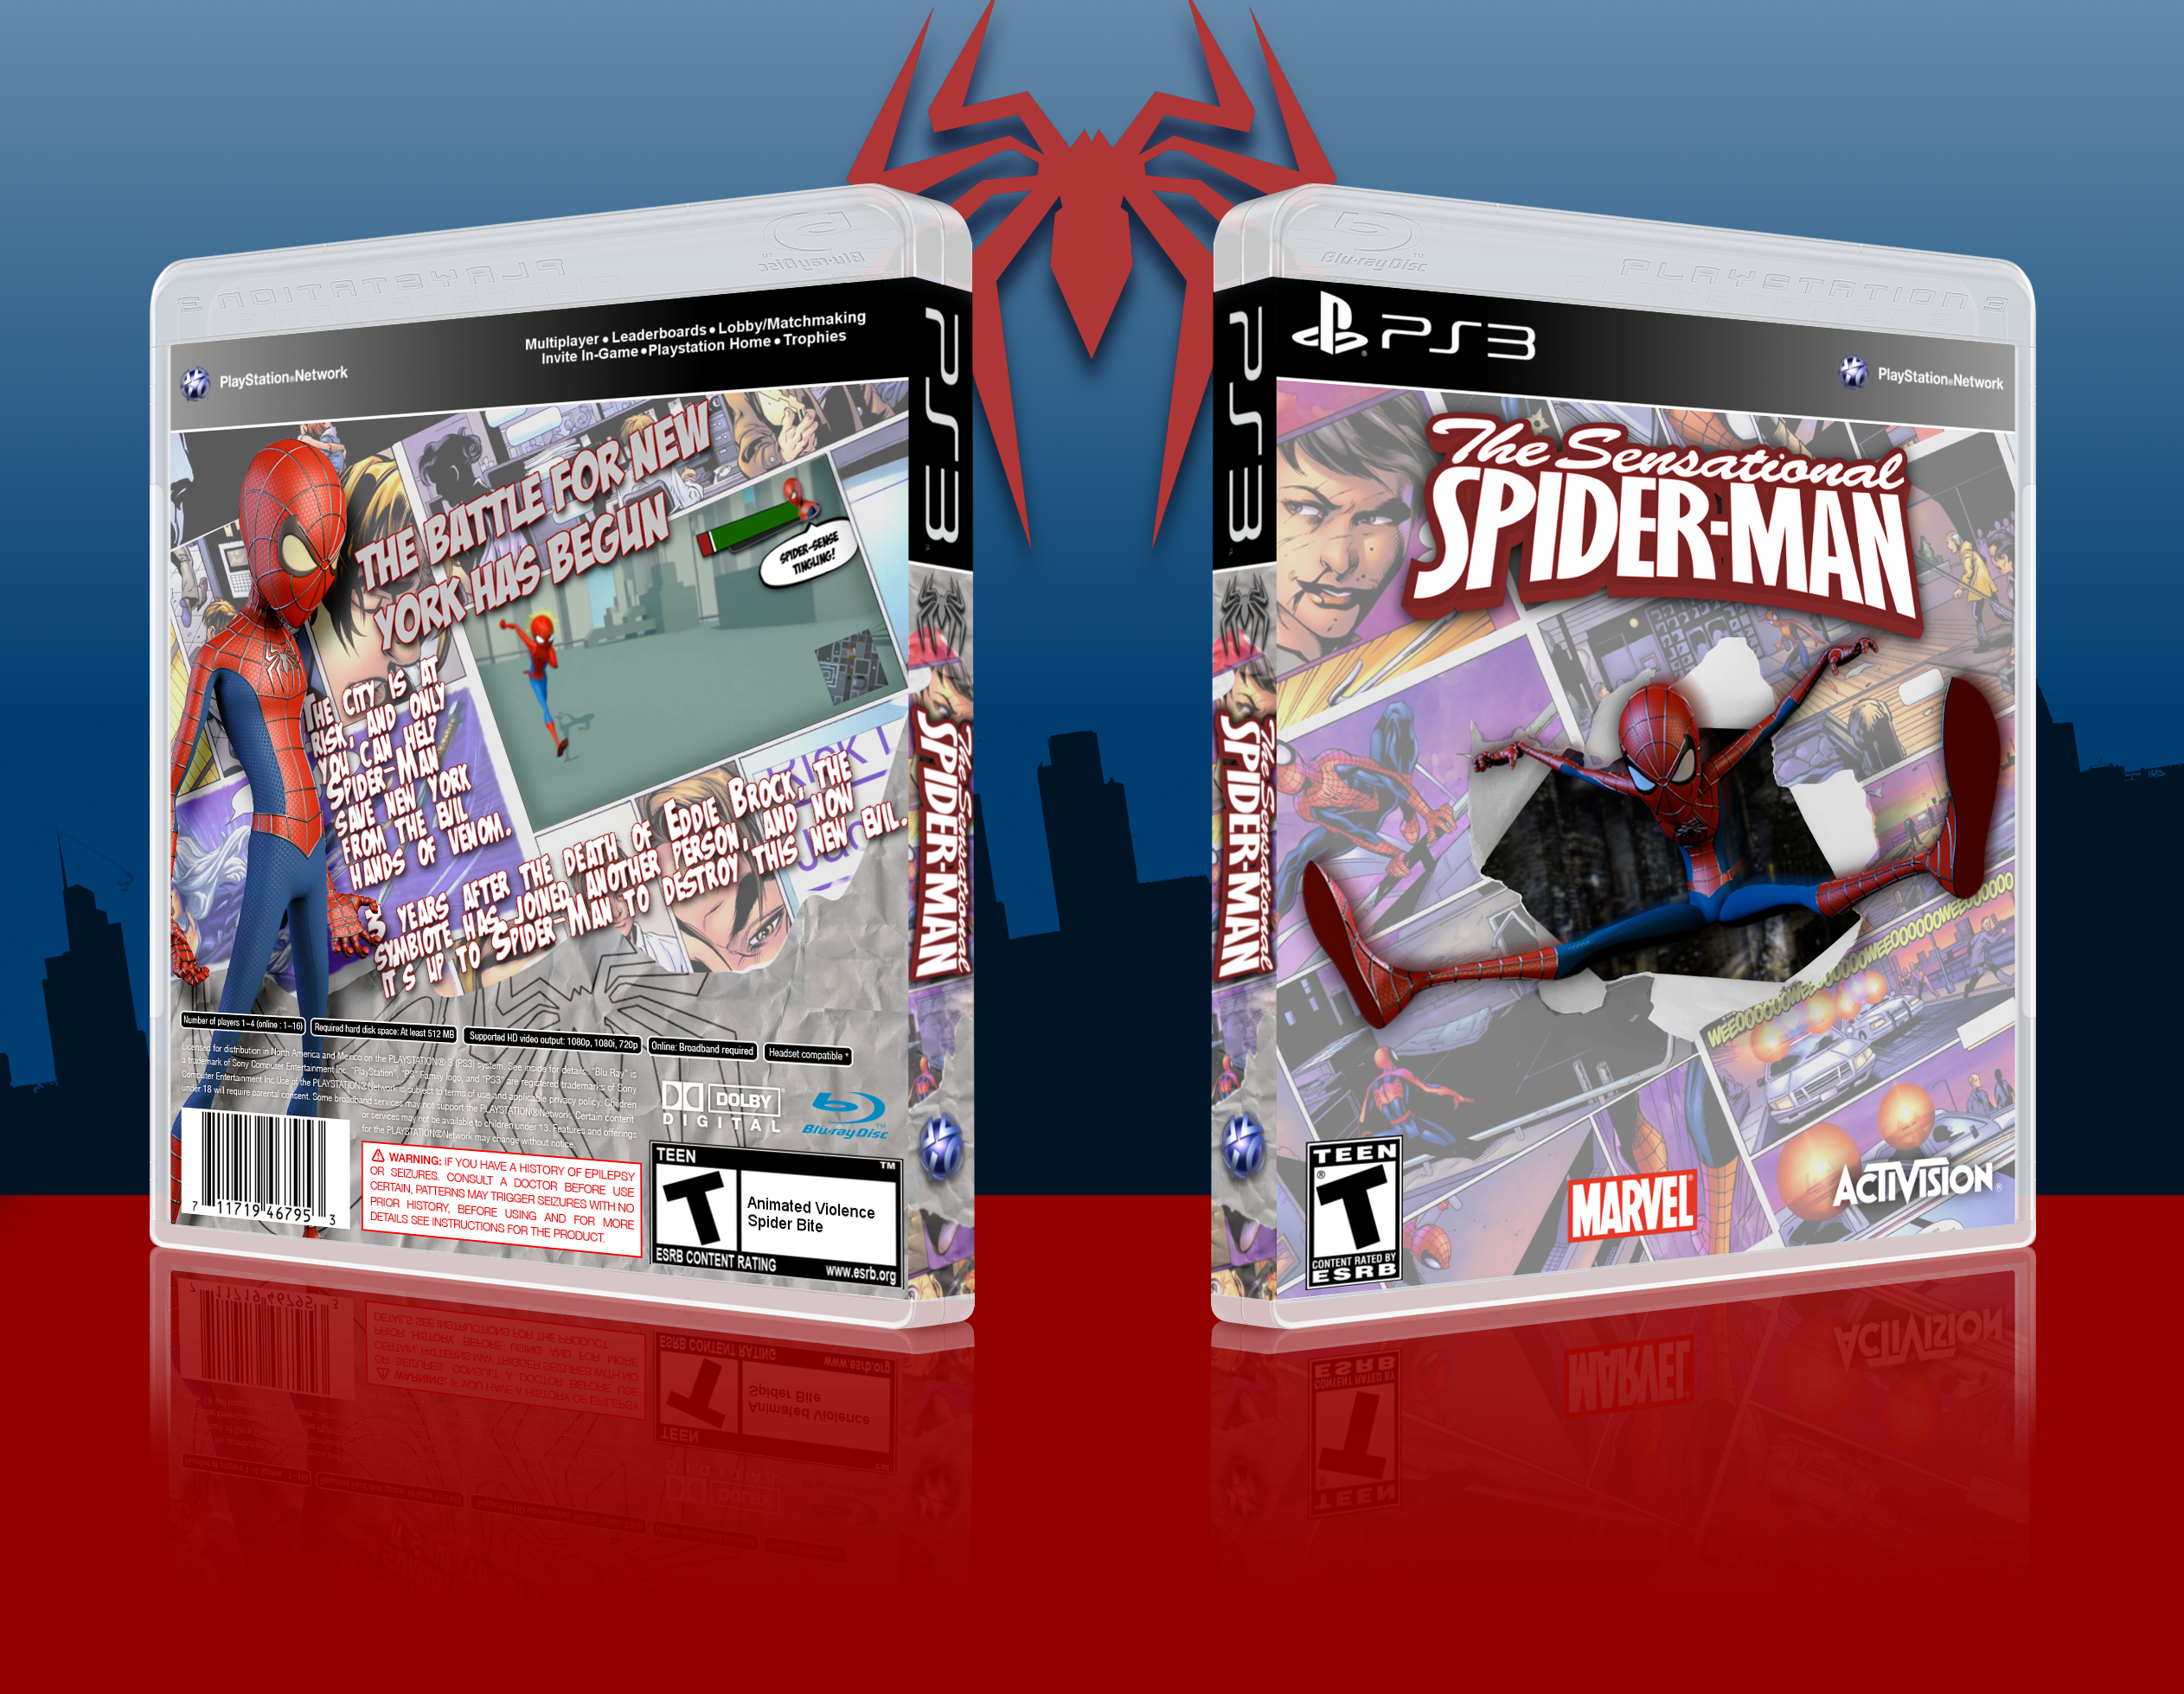 The Sensational Spider-Man box cover